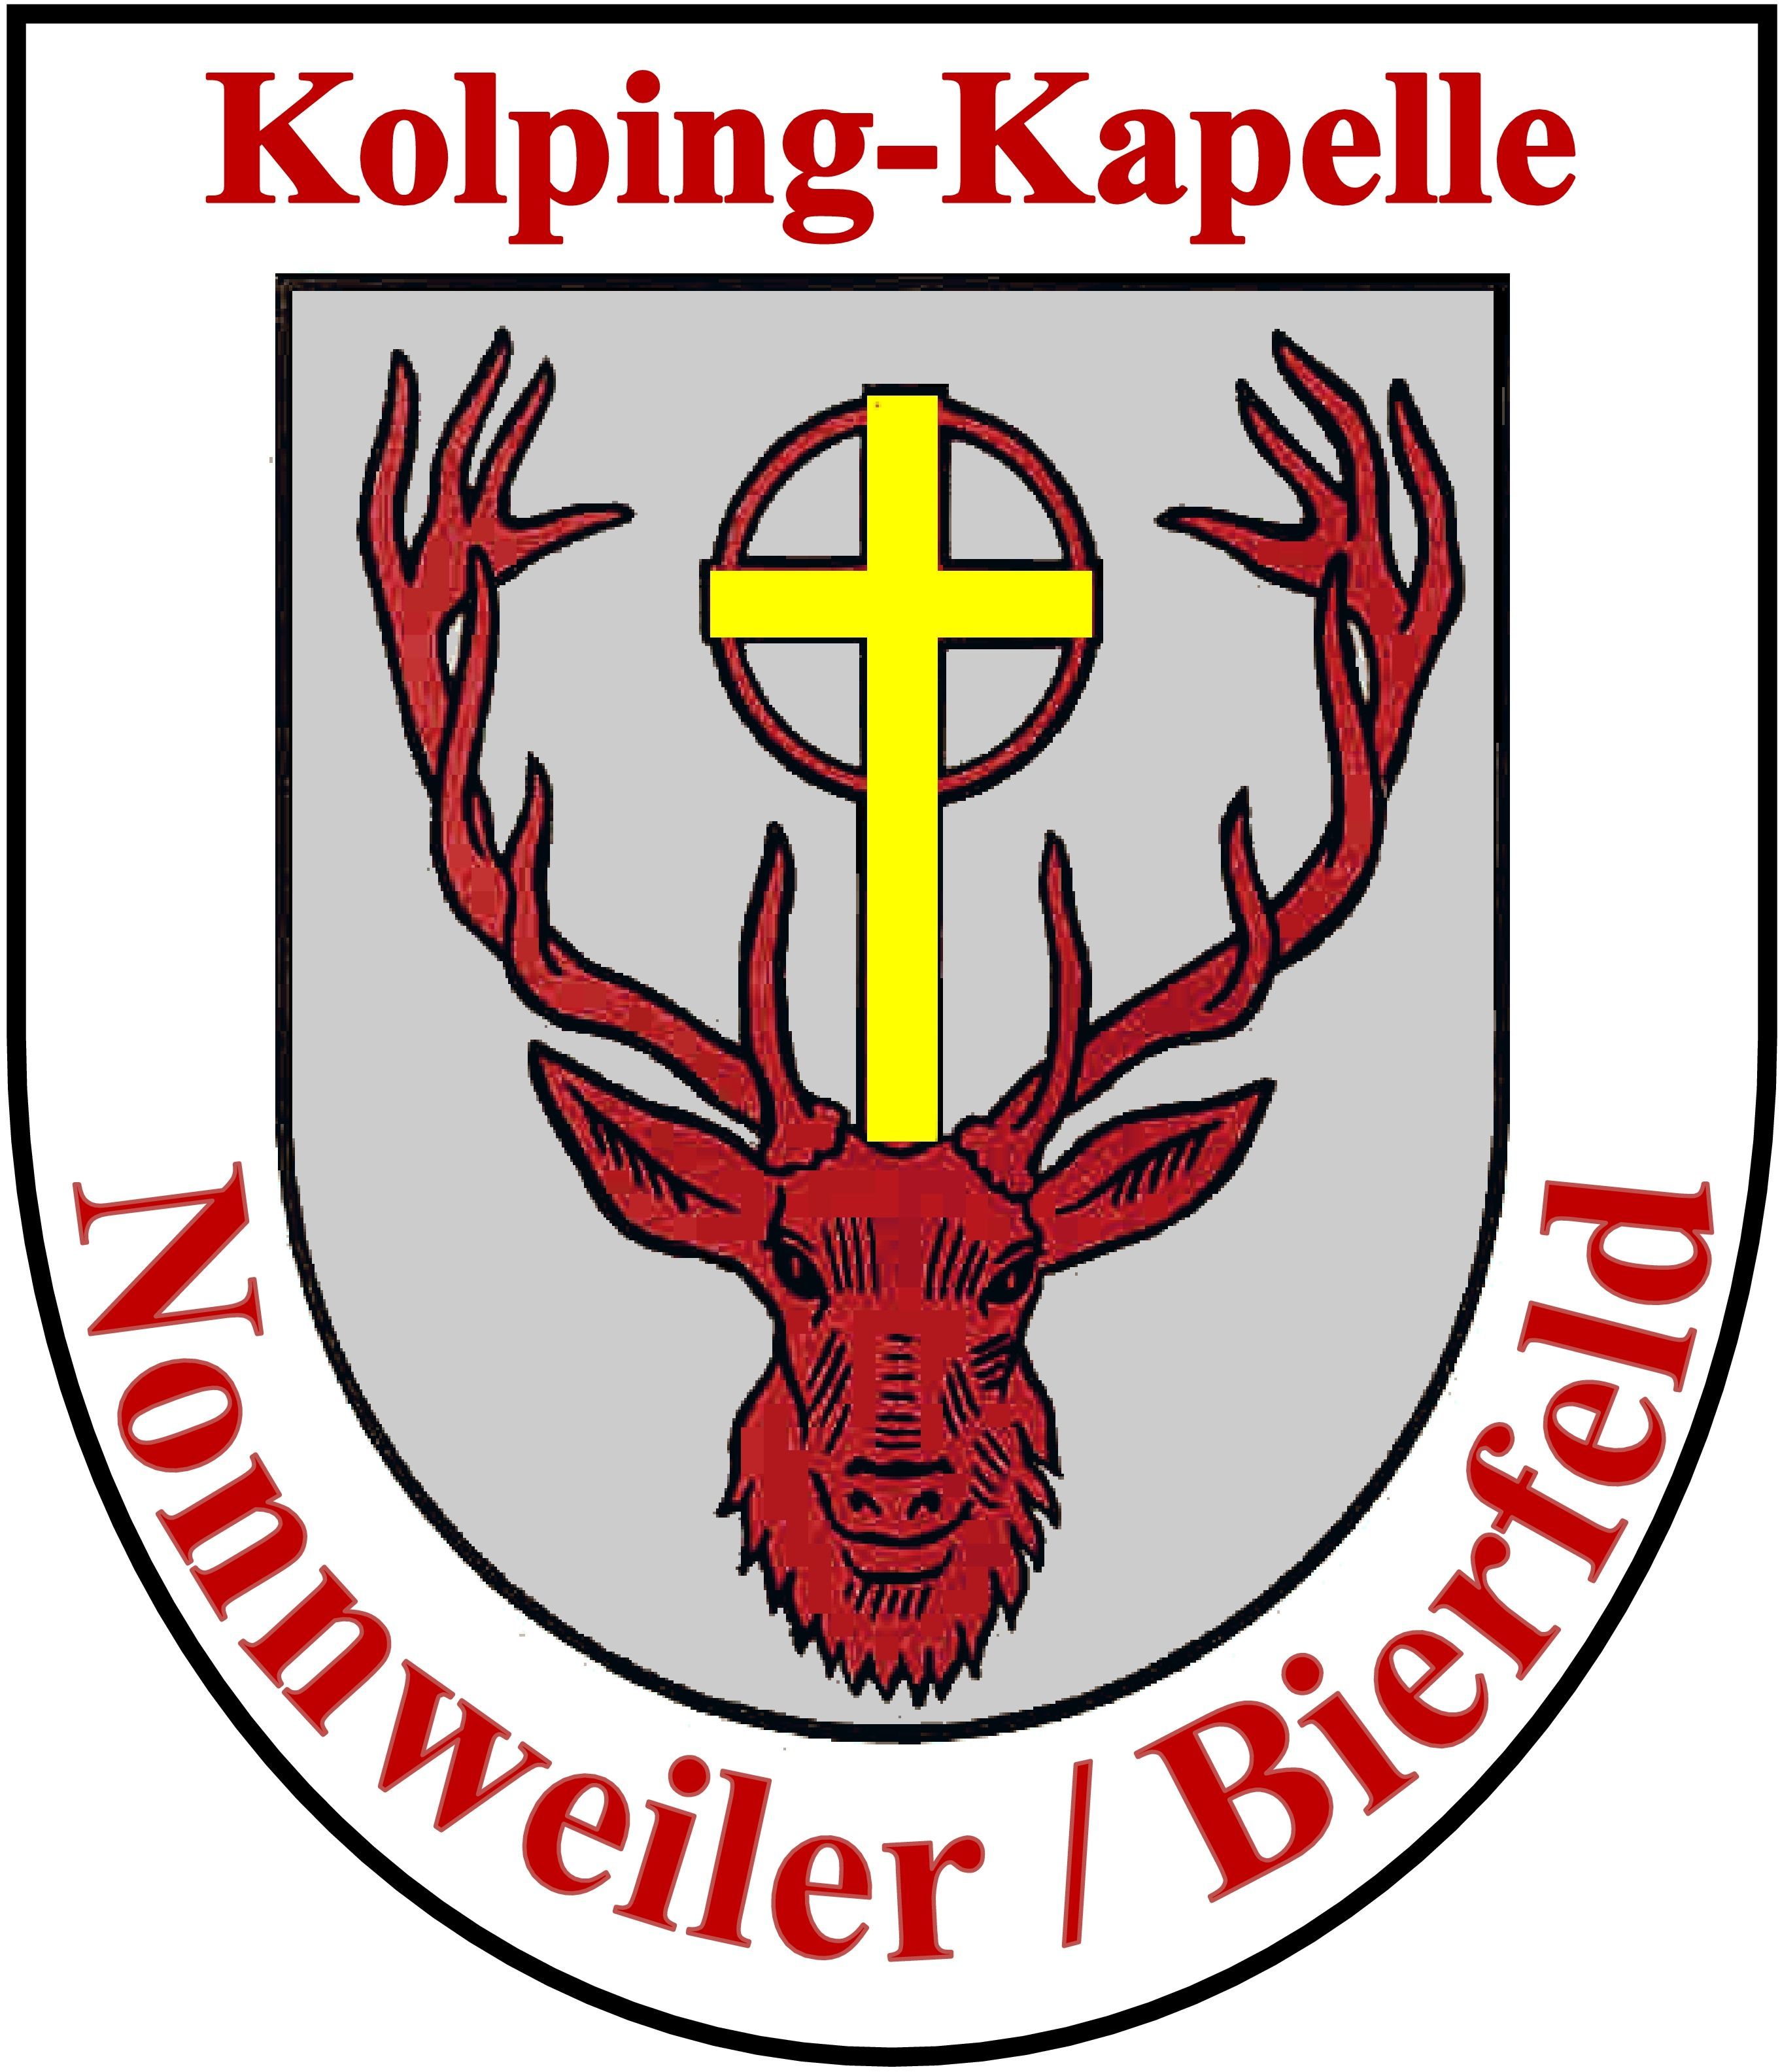 Profilbild des Vereins 'Kolping-Kapelle Nonnweiler/Bierfeld'